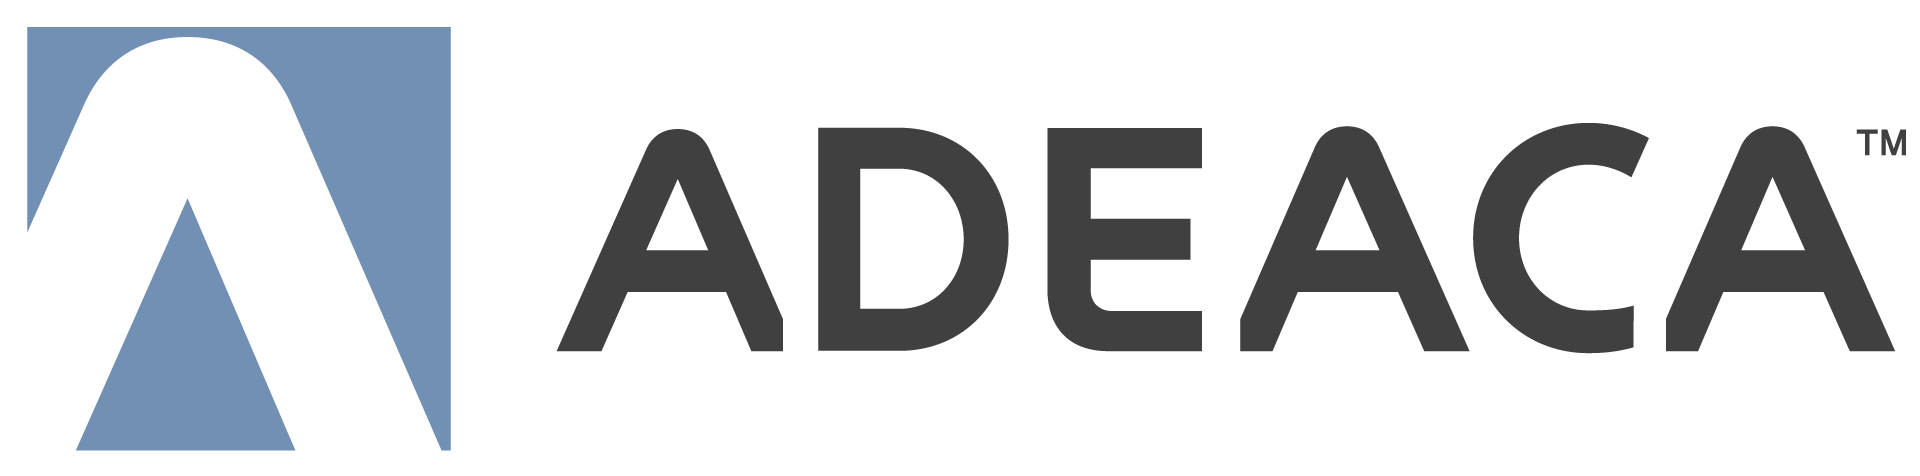 Adeaca Announces Project Business Automation Now Available for SAP